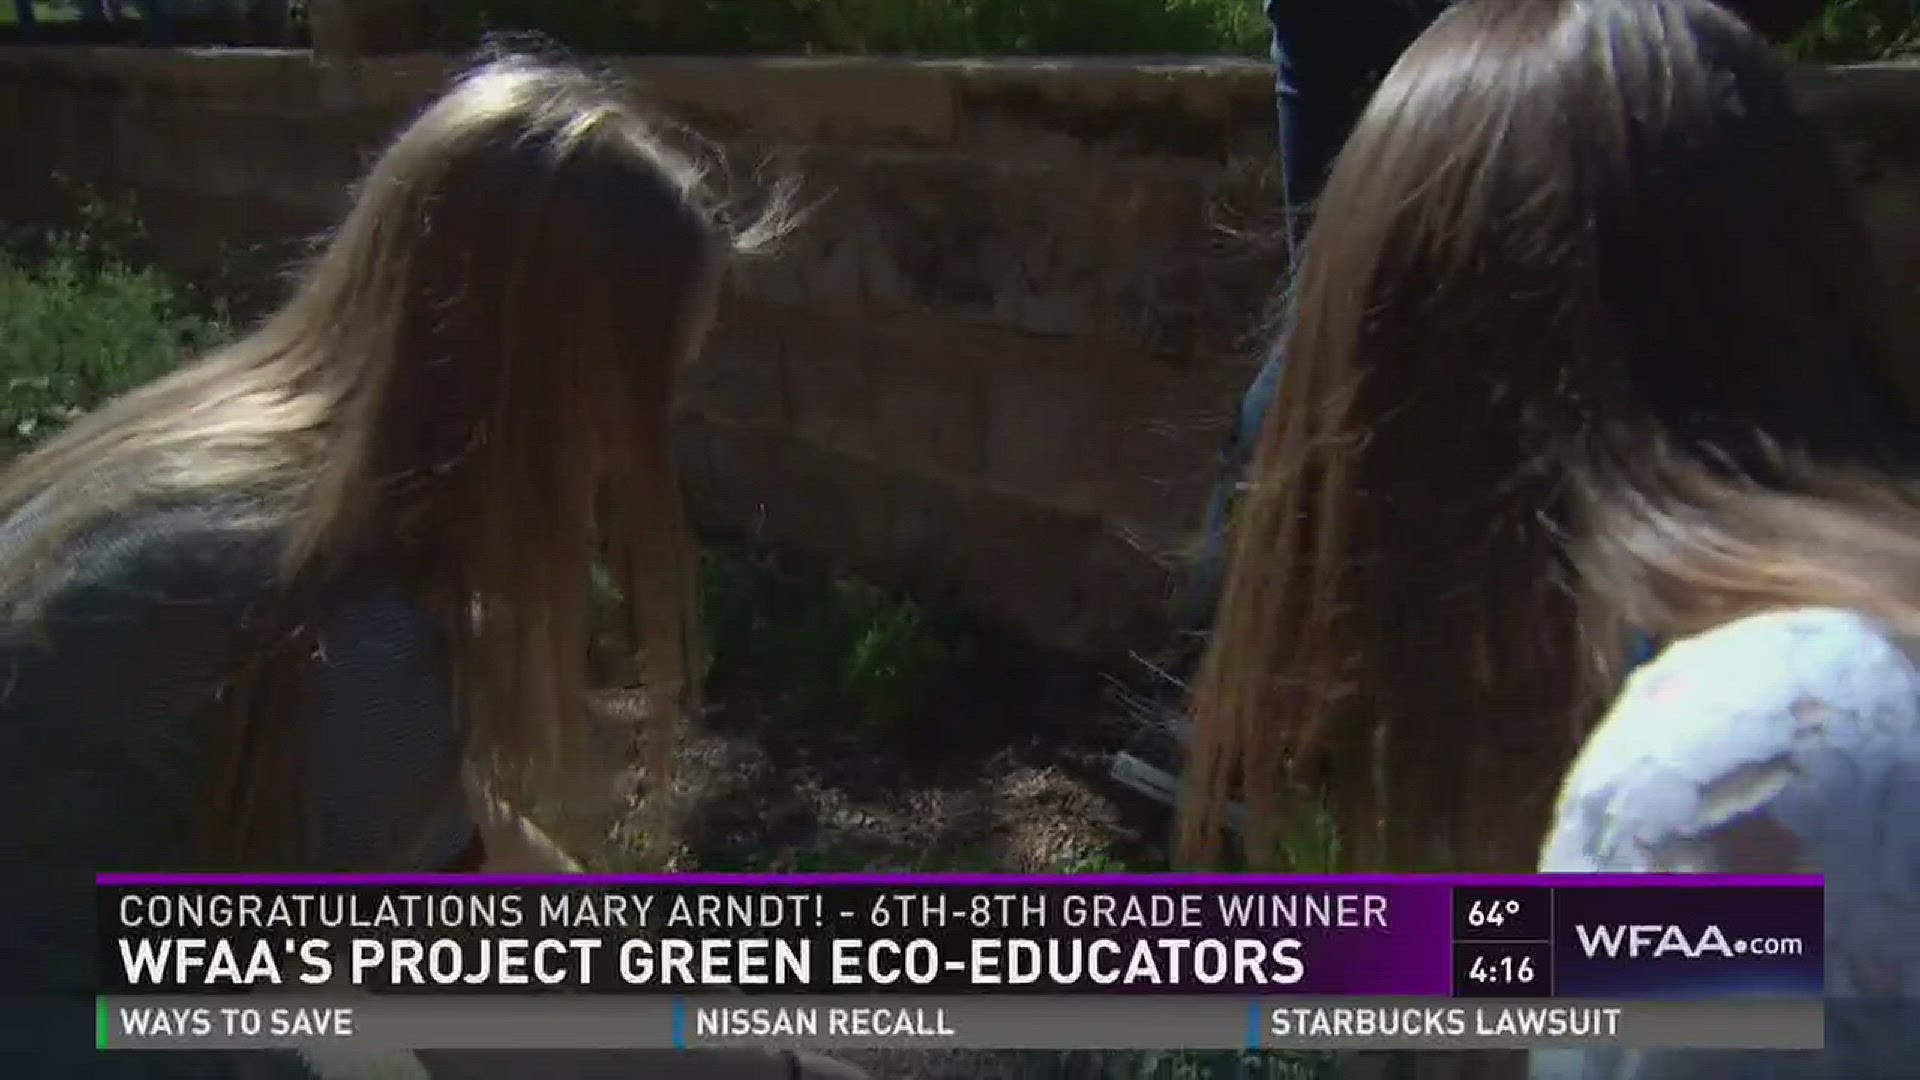 WFAA's Project Green: 6th-8th grade winner